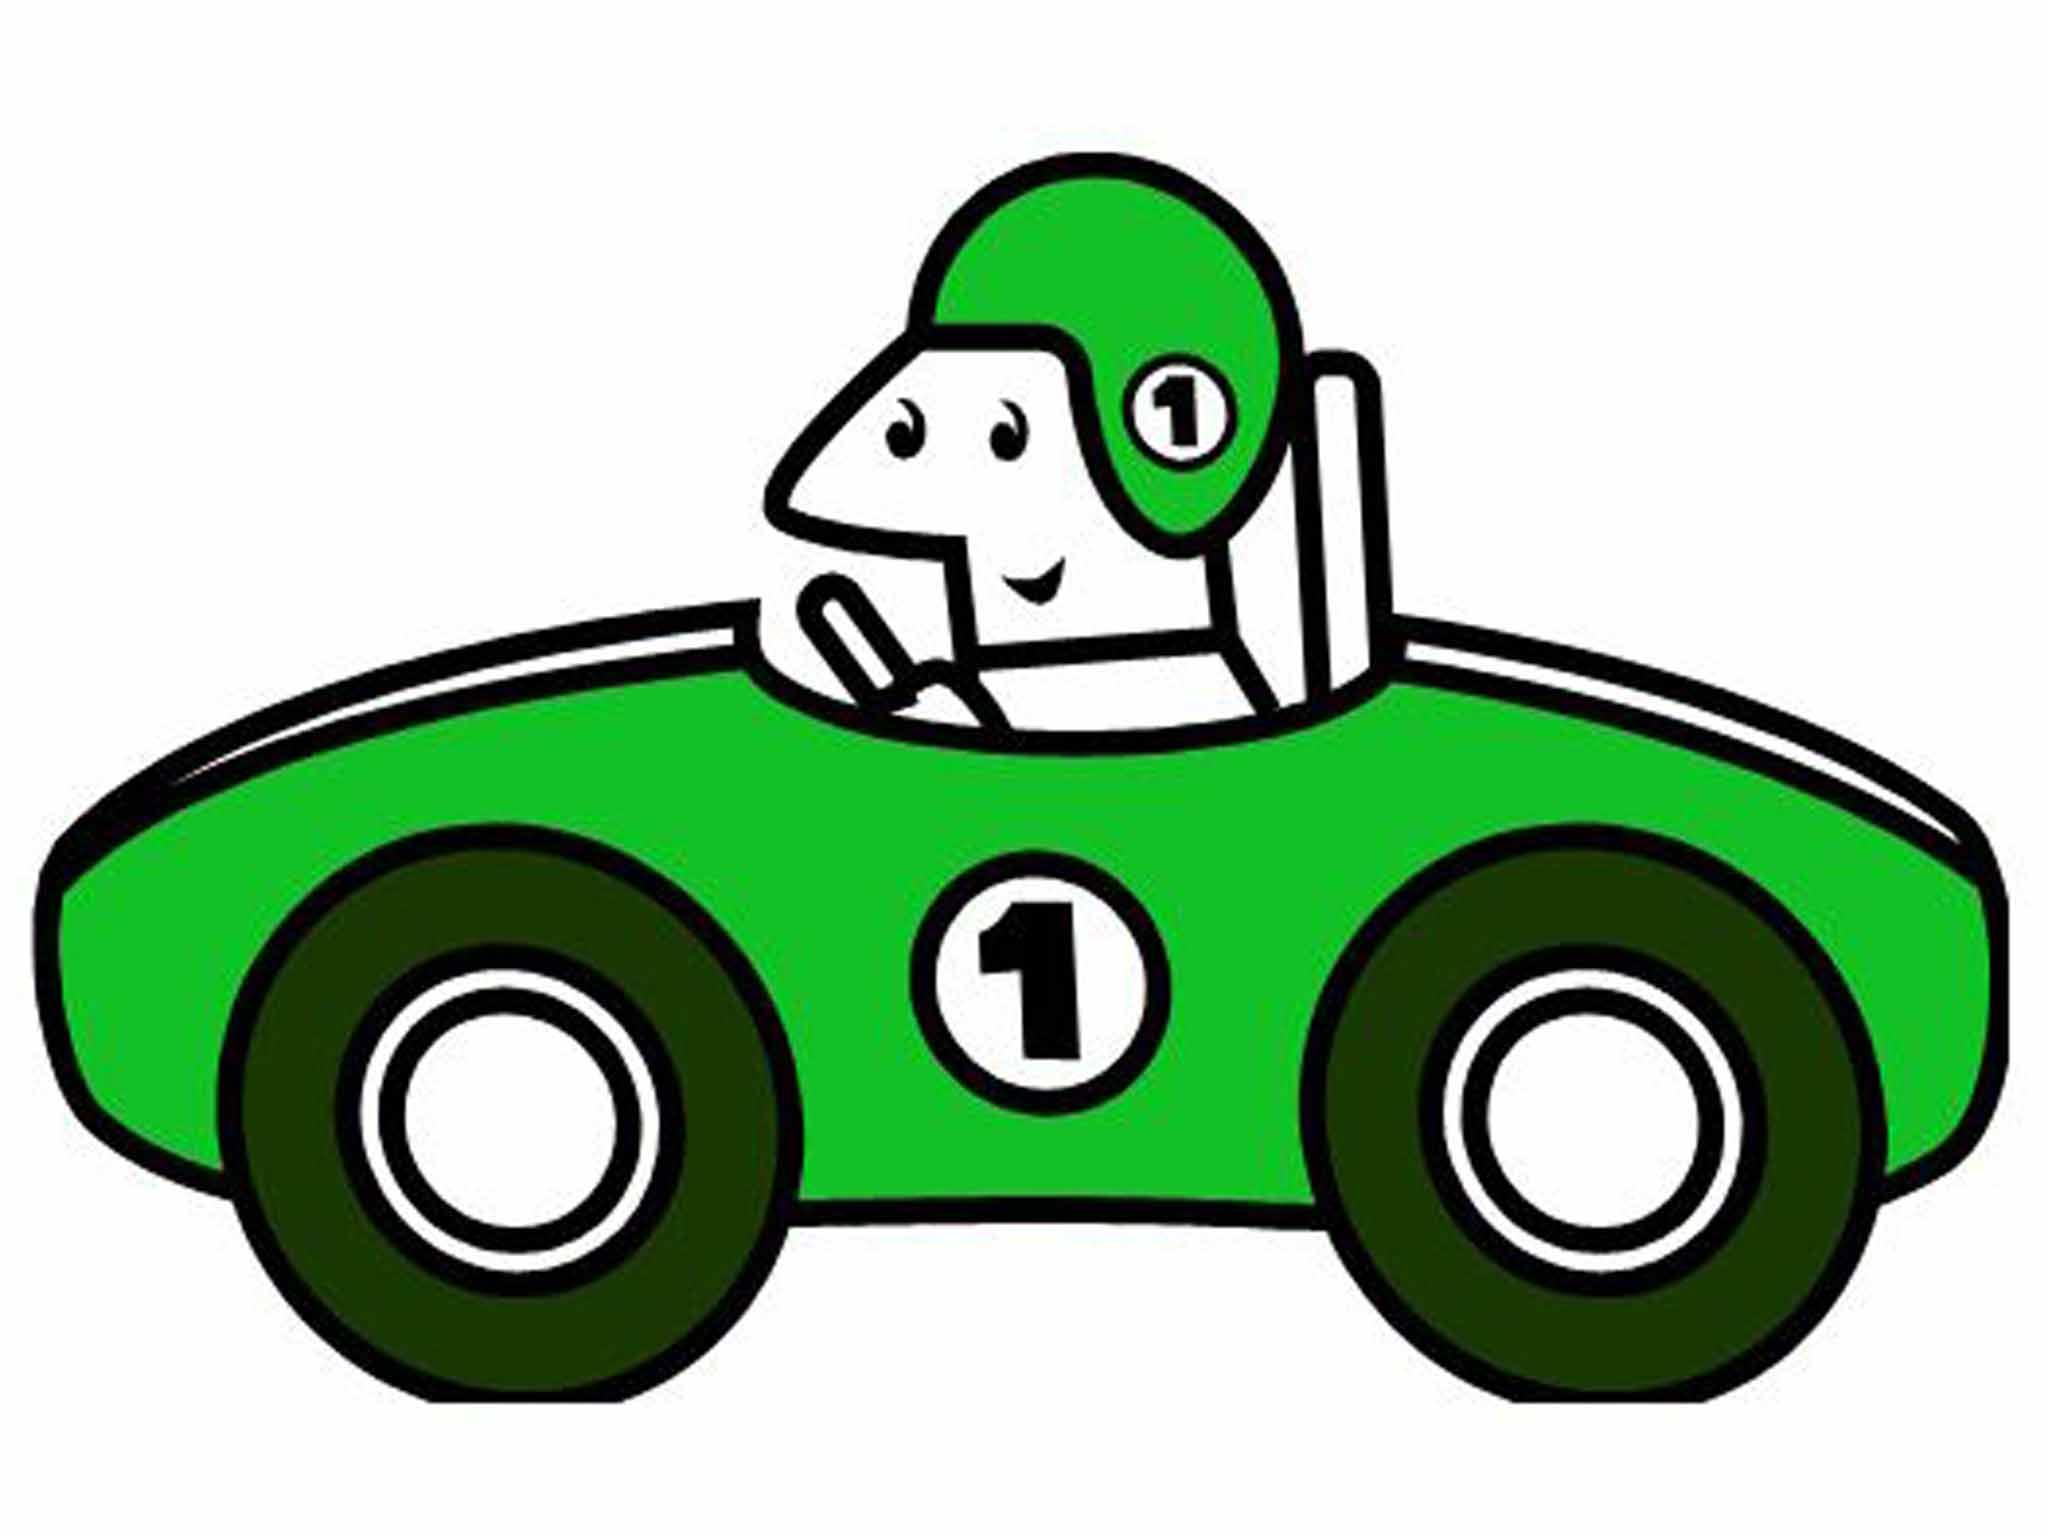 Race car green racing car clip art clipart pictures image